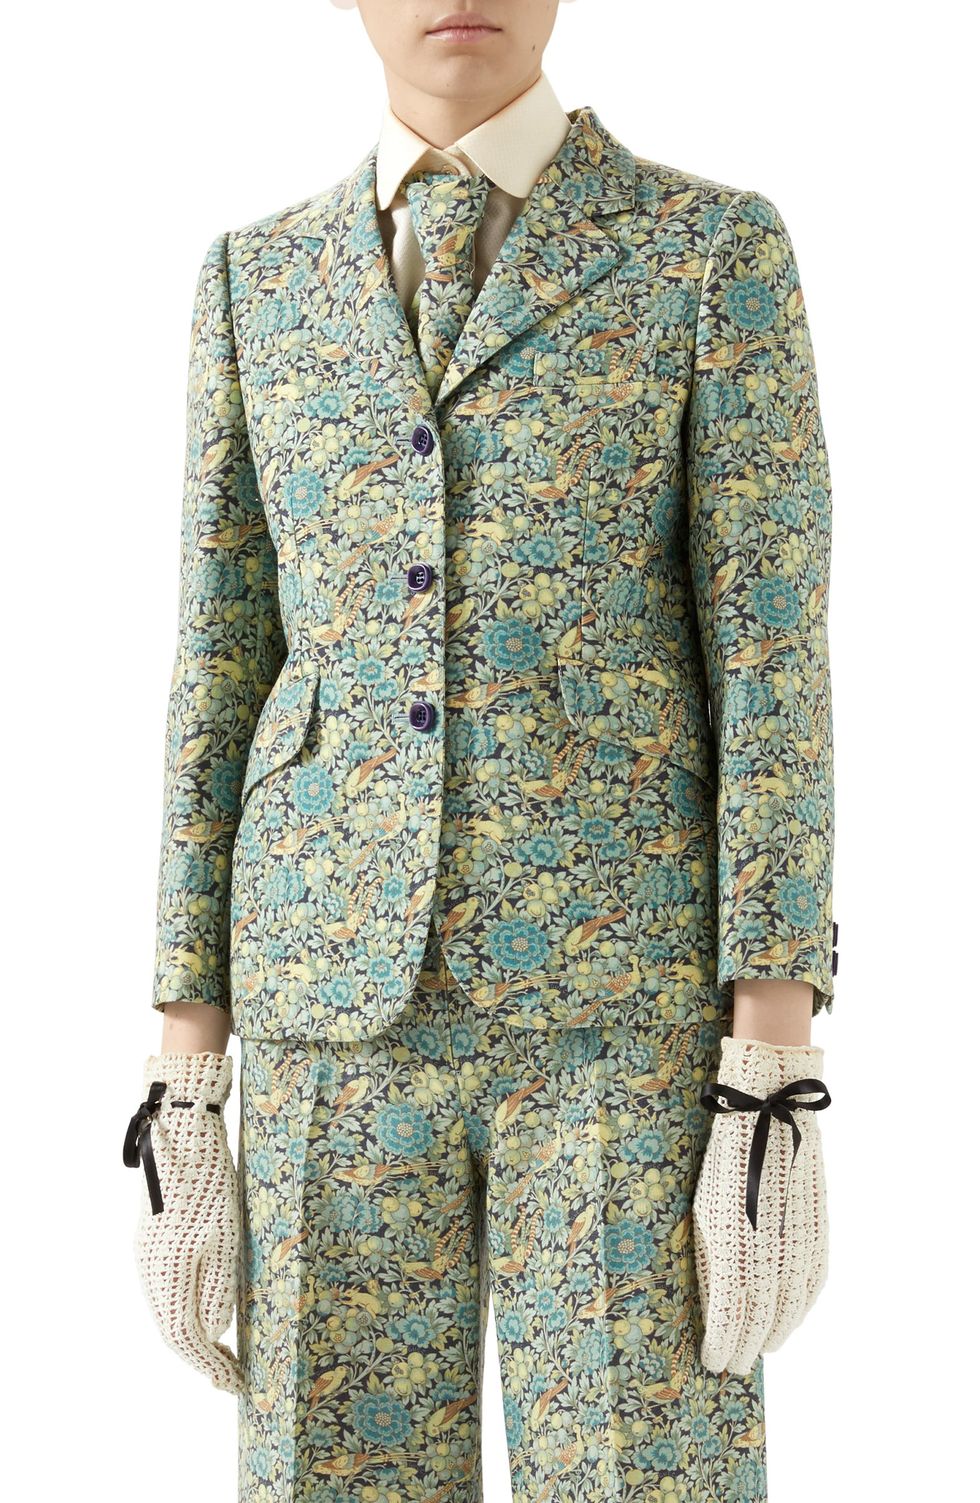 Gucci x Liberty London Floral Print Wool & Mohair Jacket